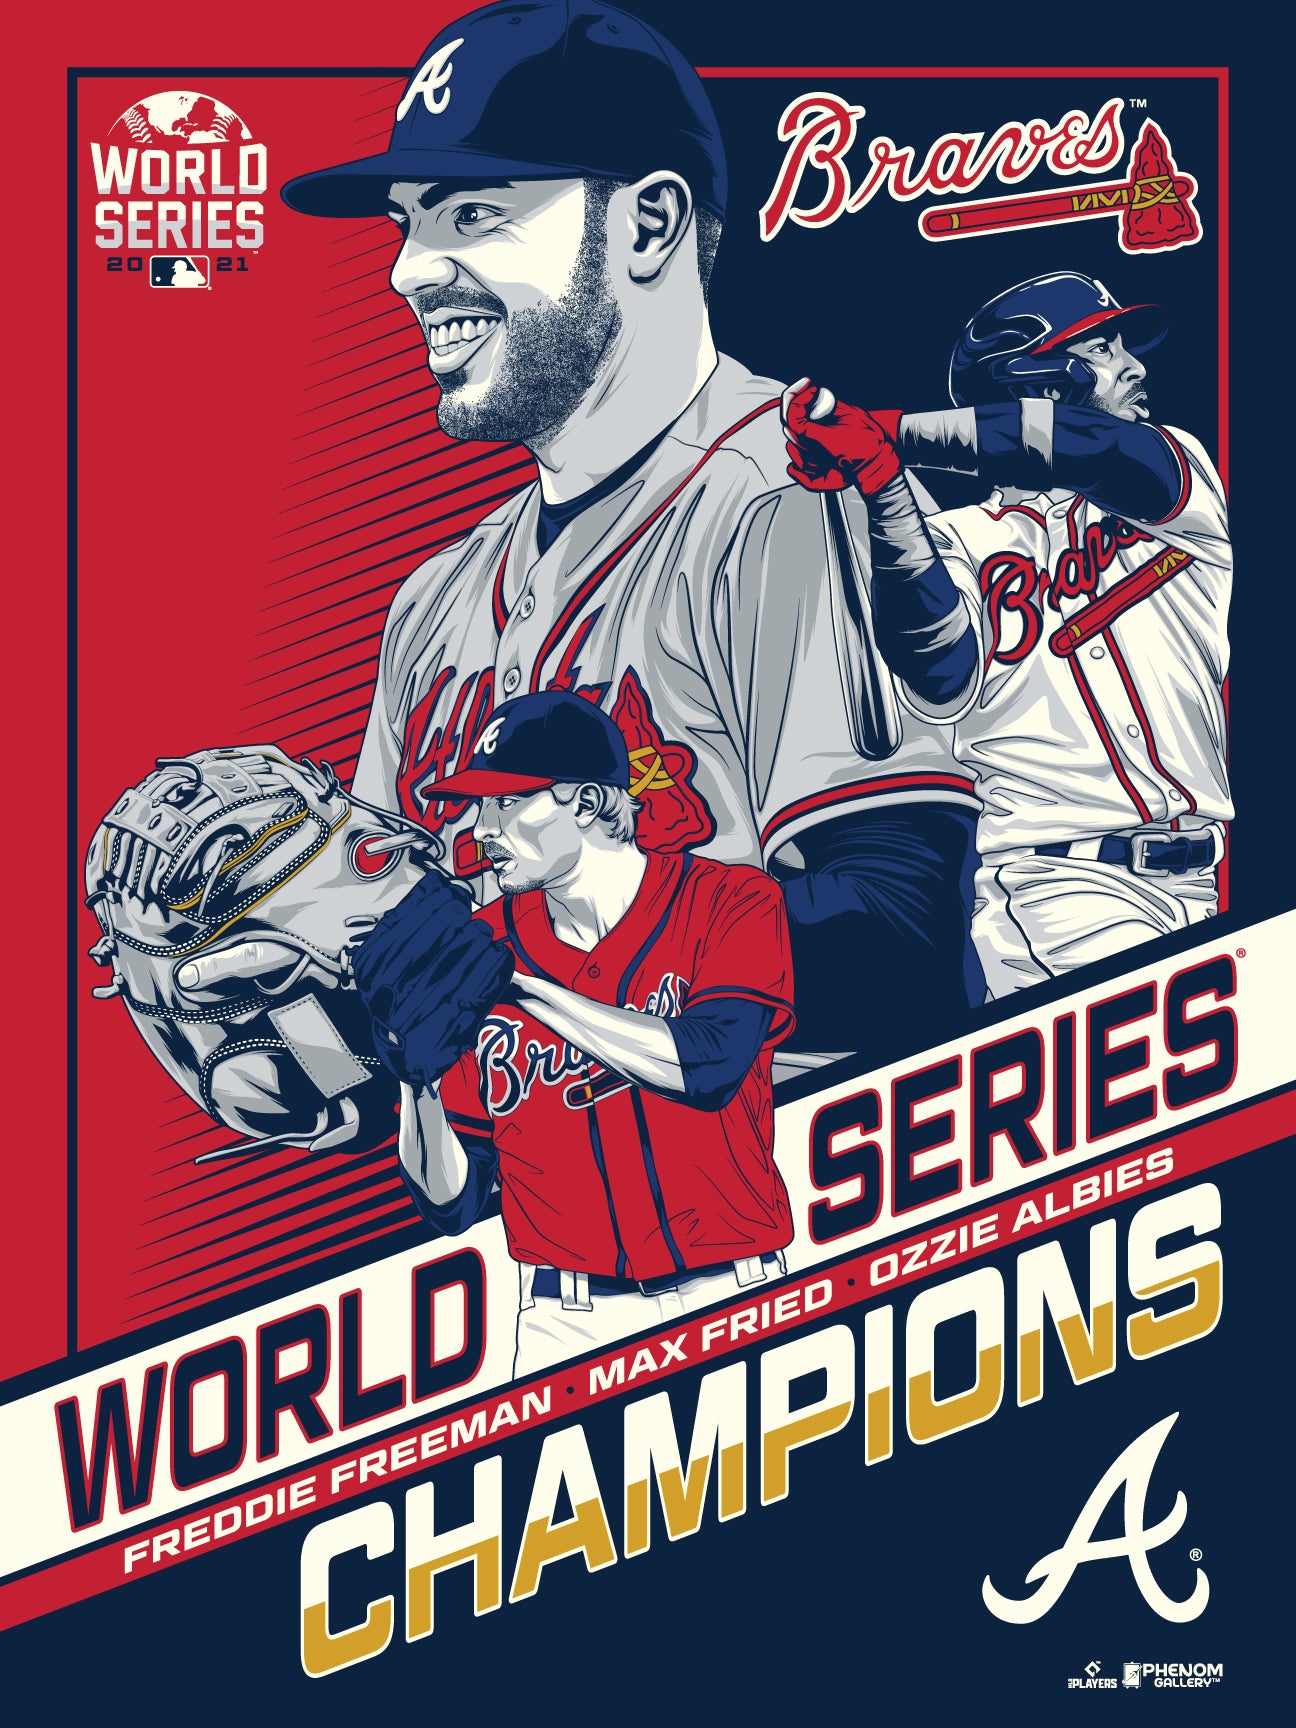 Braves win World Series 2021